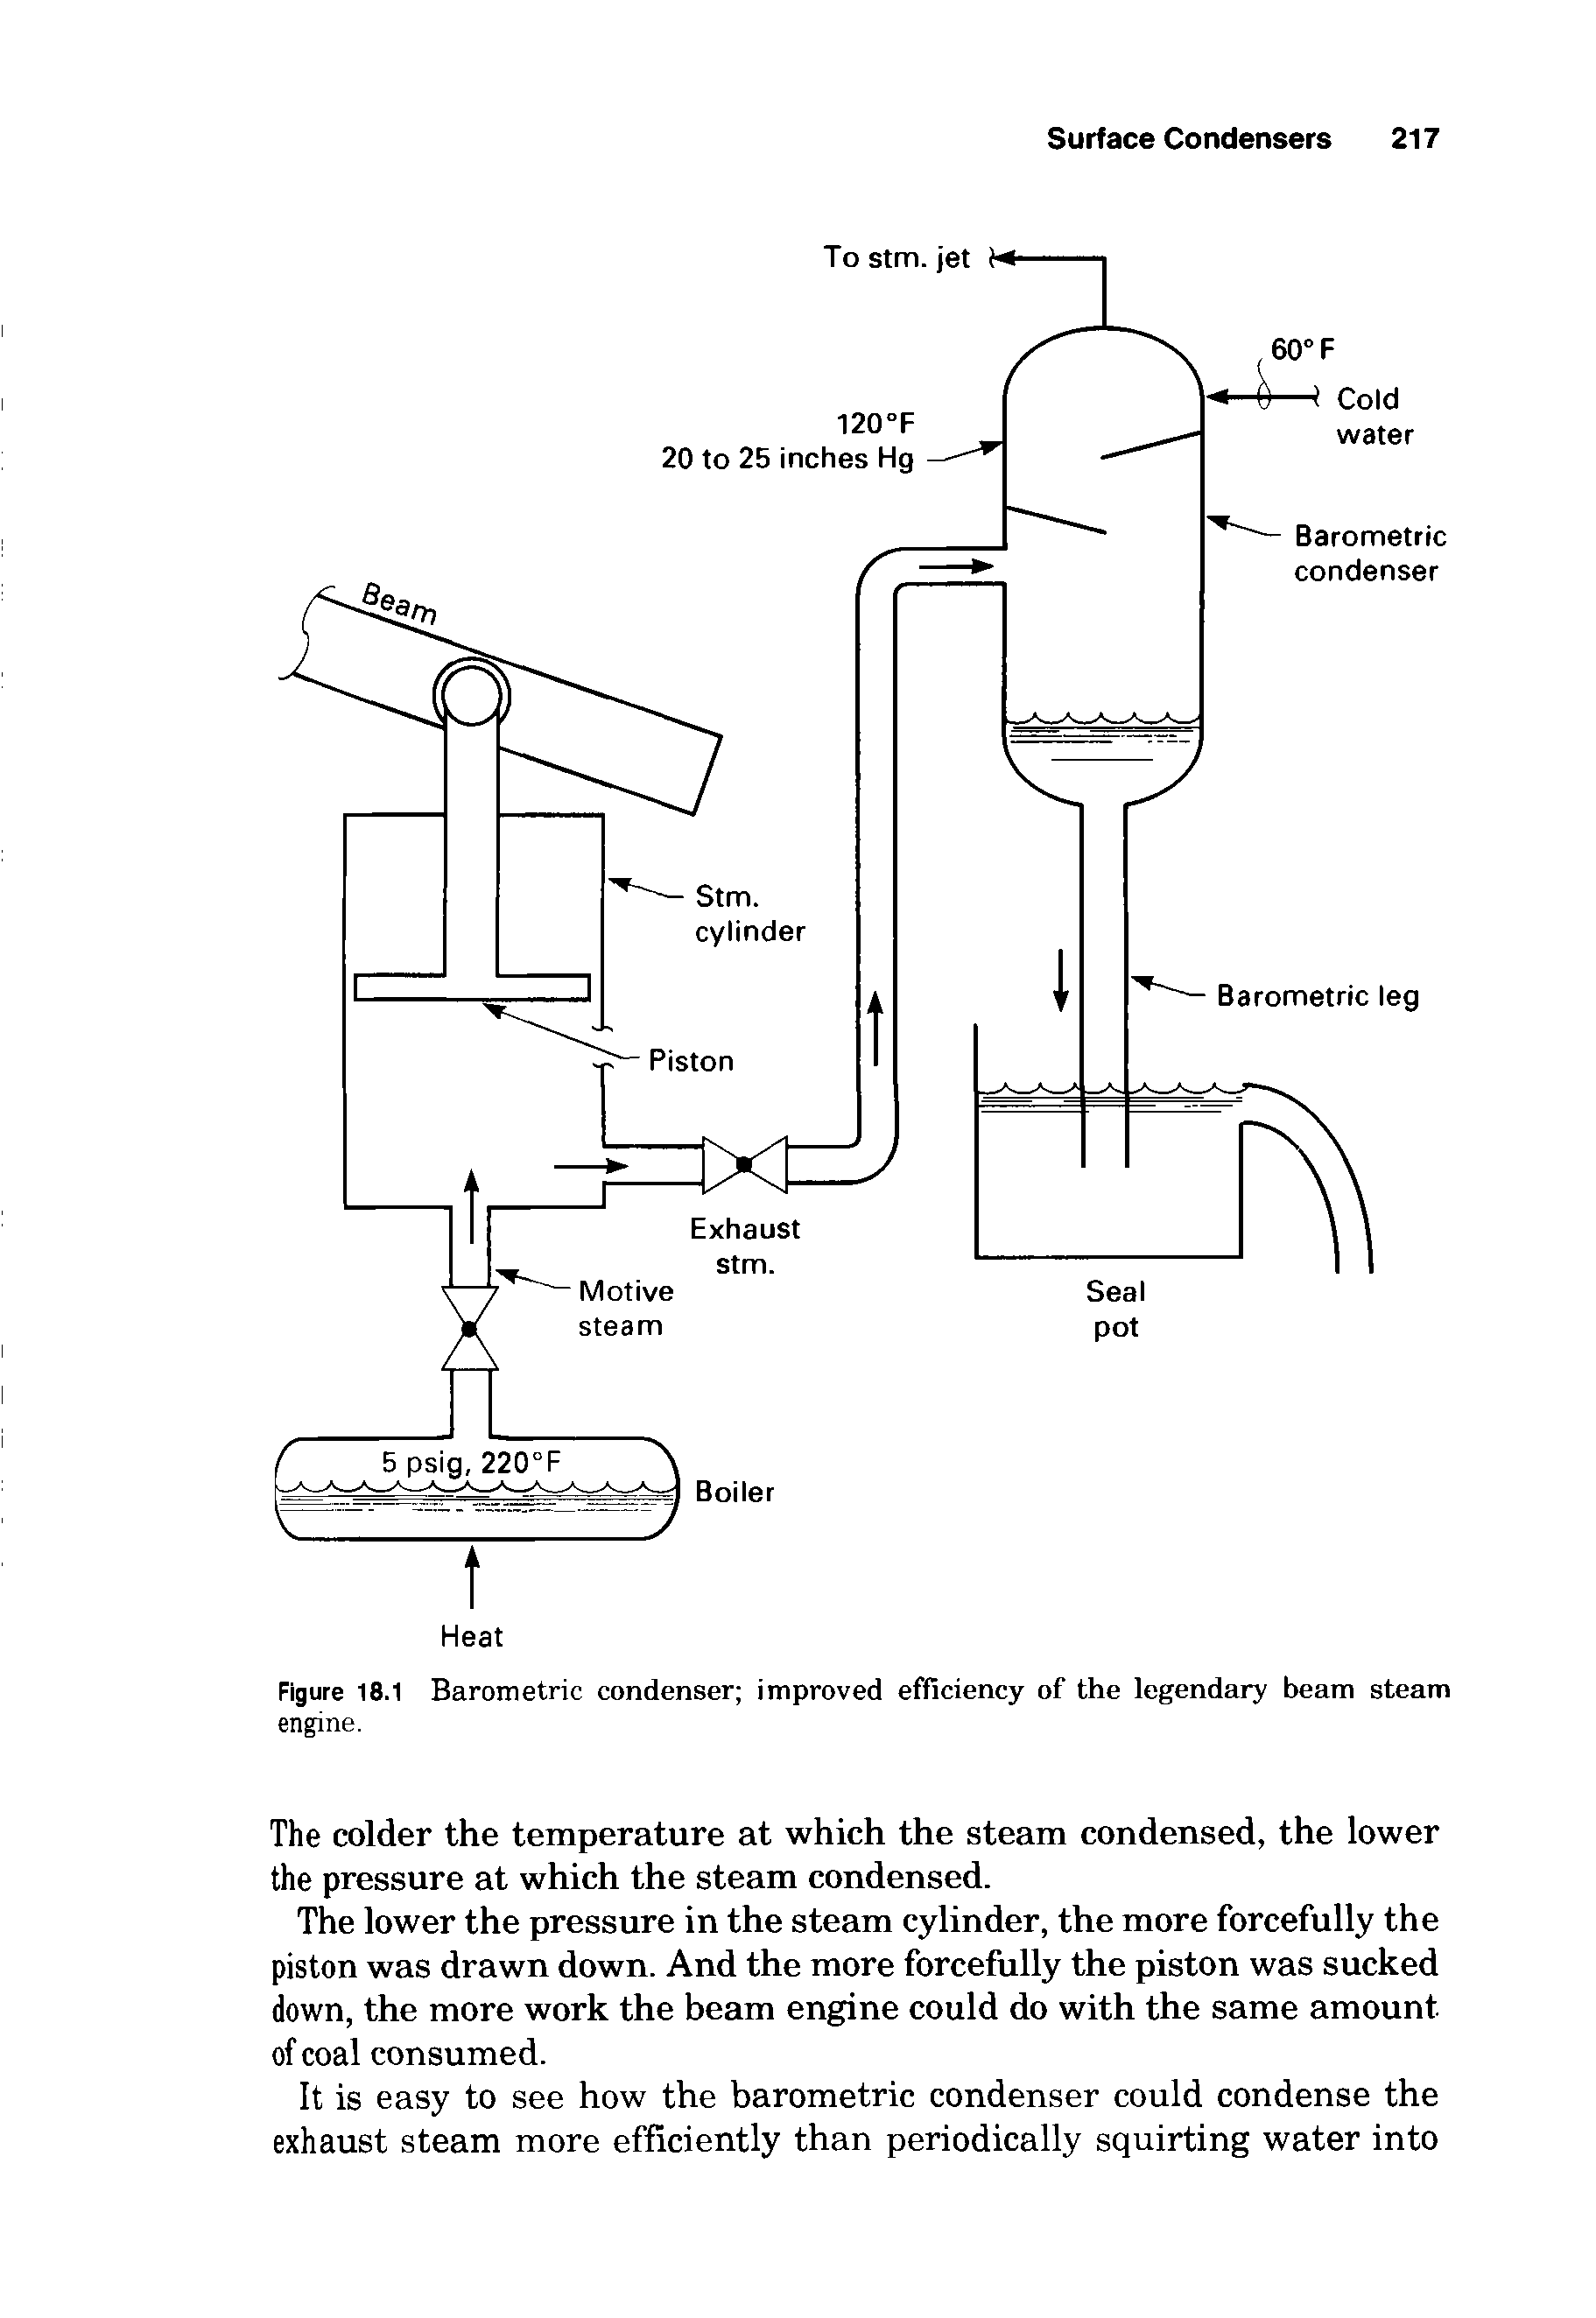 Figure 18.1 Barometric condenser improved efficiency of the legendary beam steam engine.